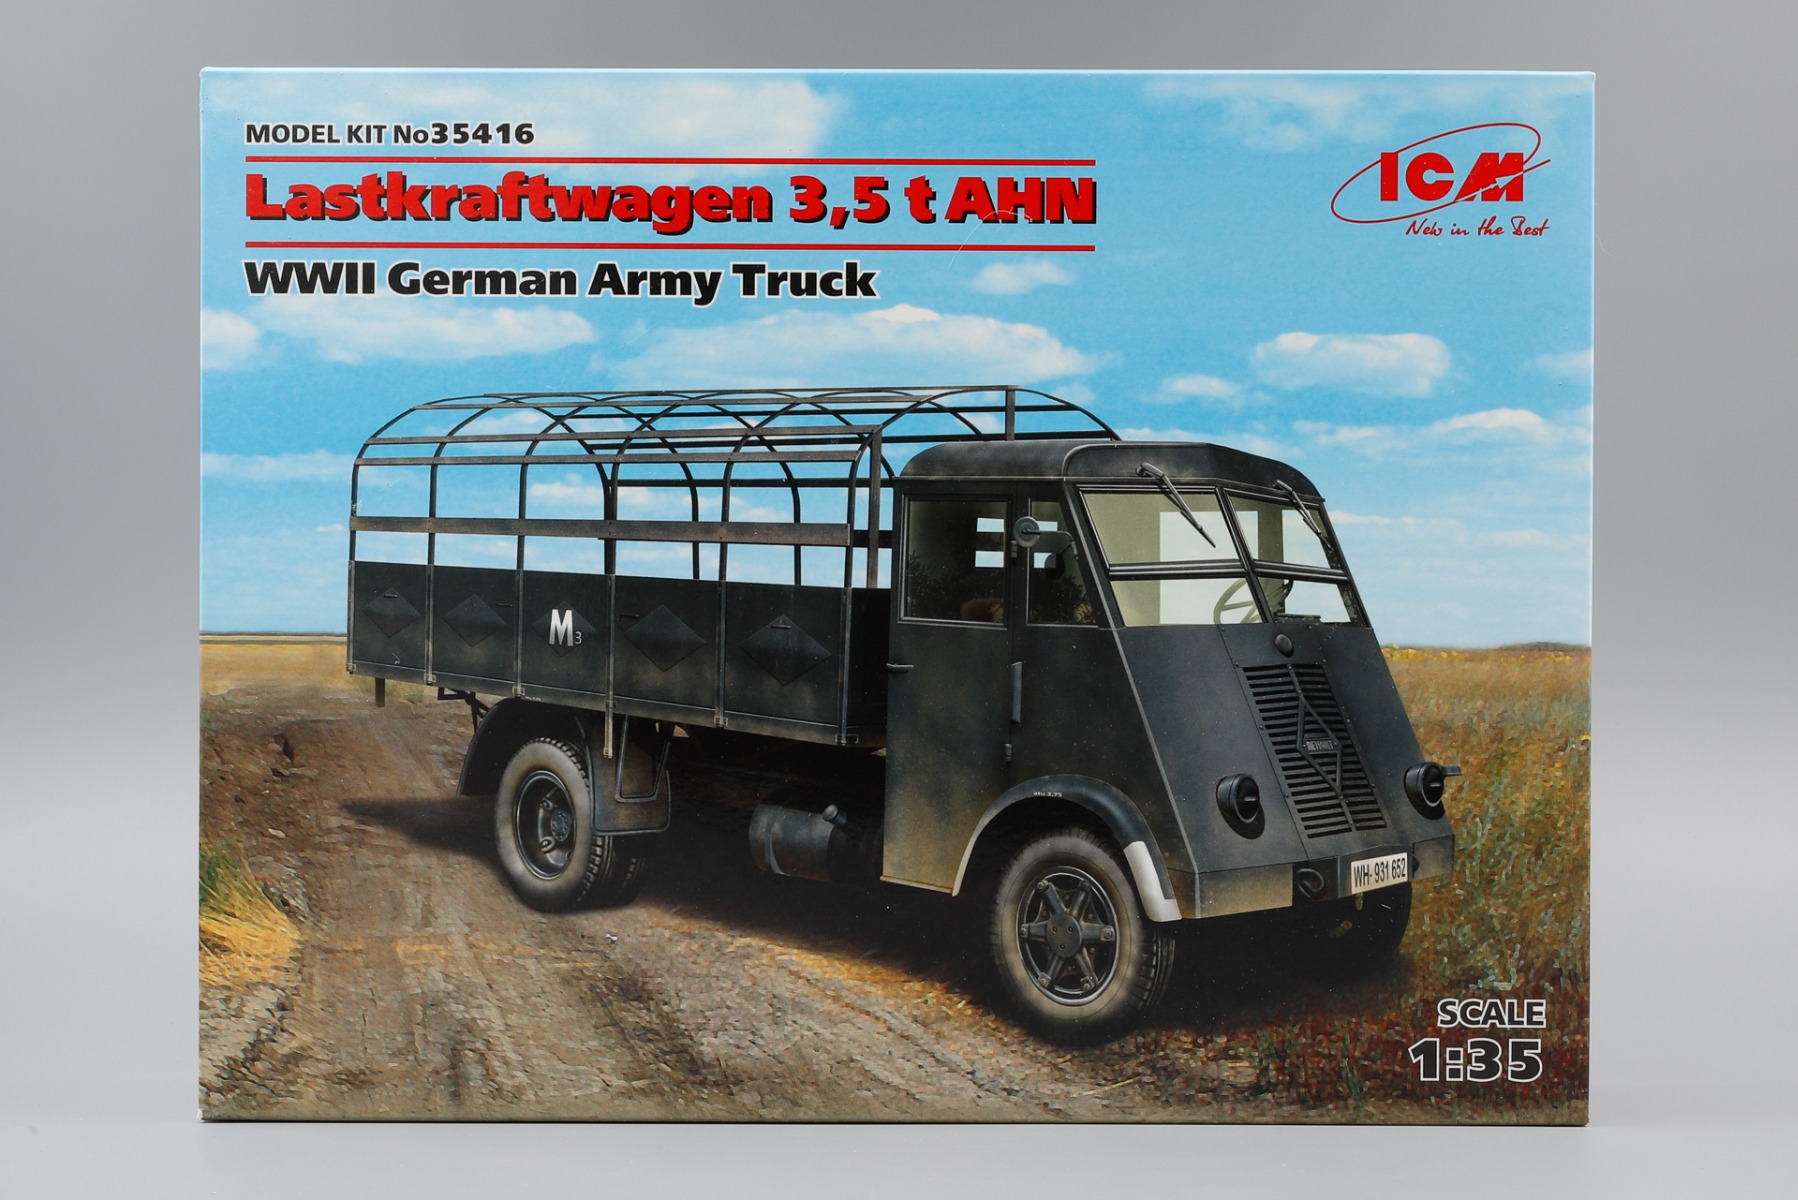  ICM35416 Lastkraftwagen 3,5 t AHN WWII German Army Truck